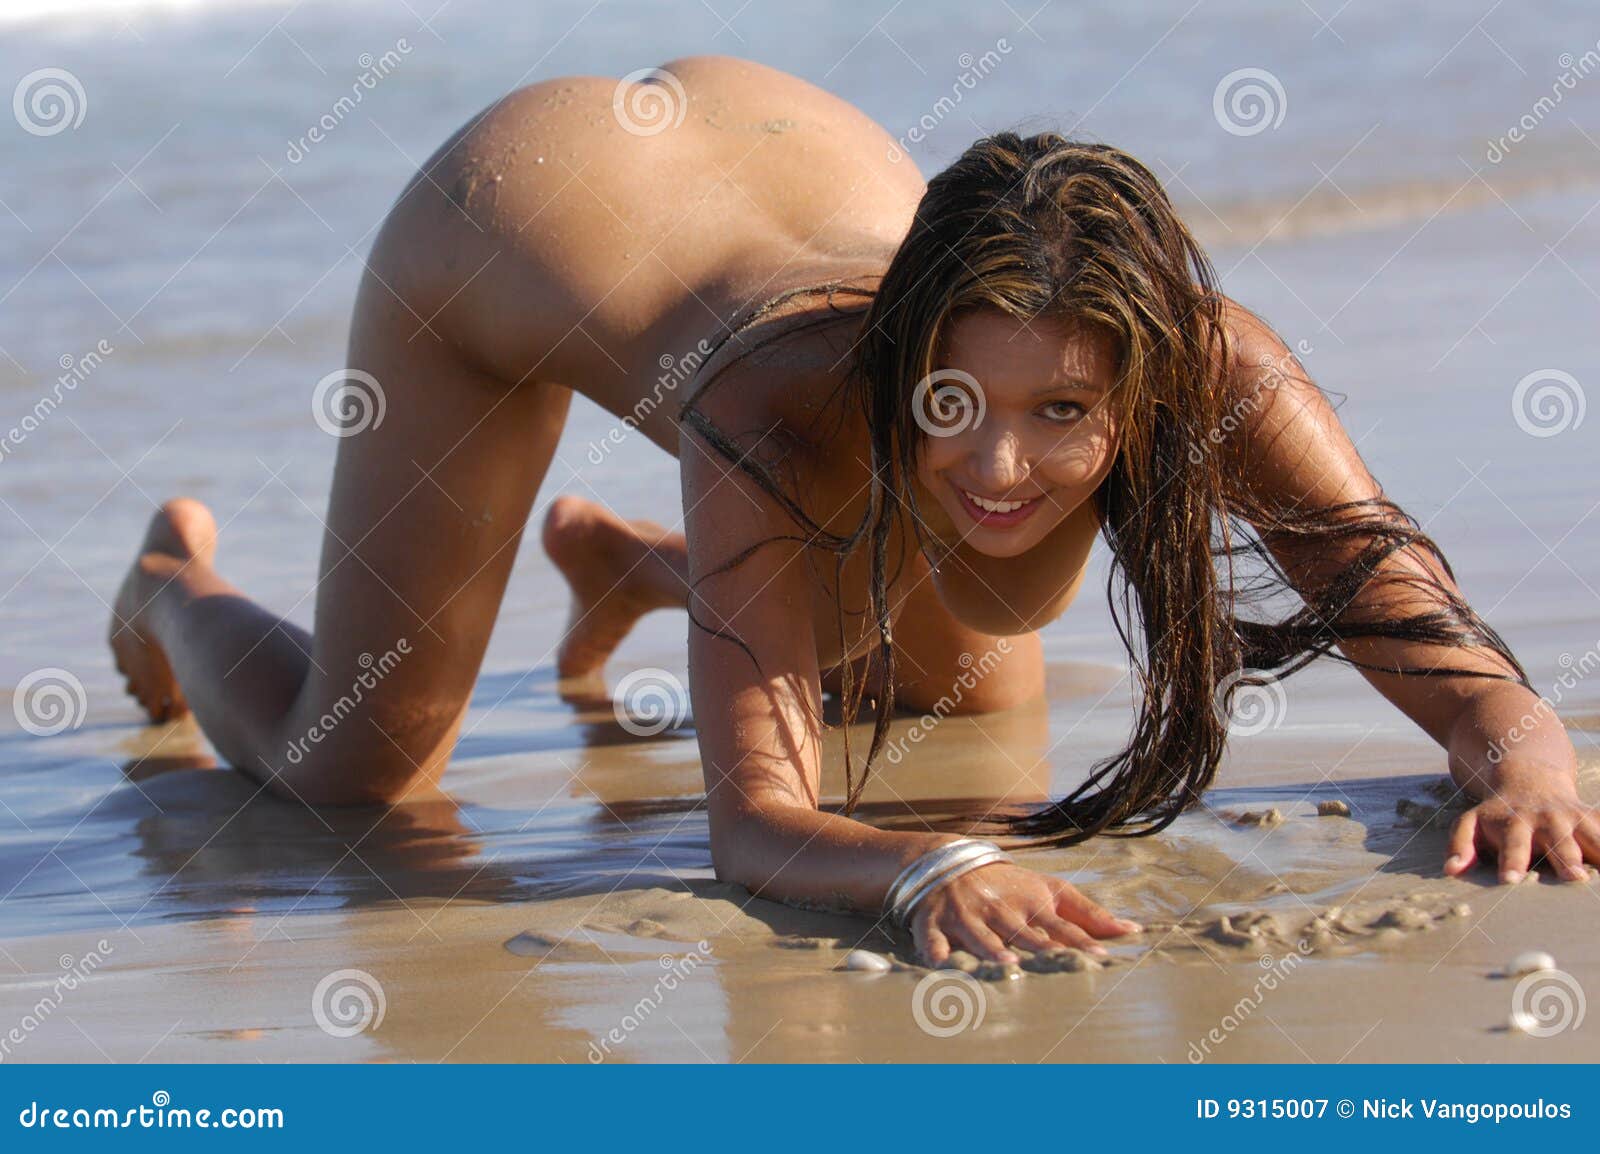 Nude girls on beach